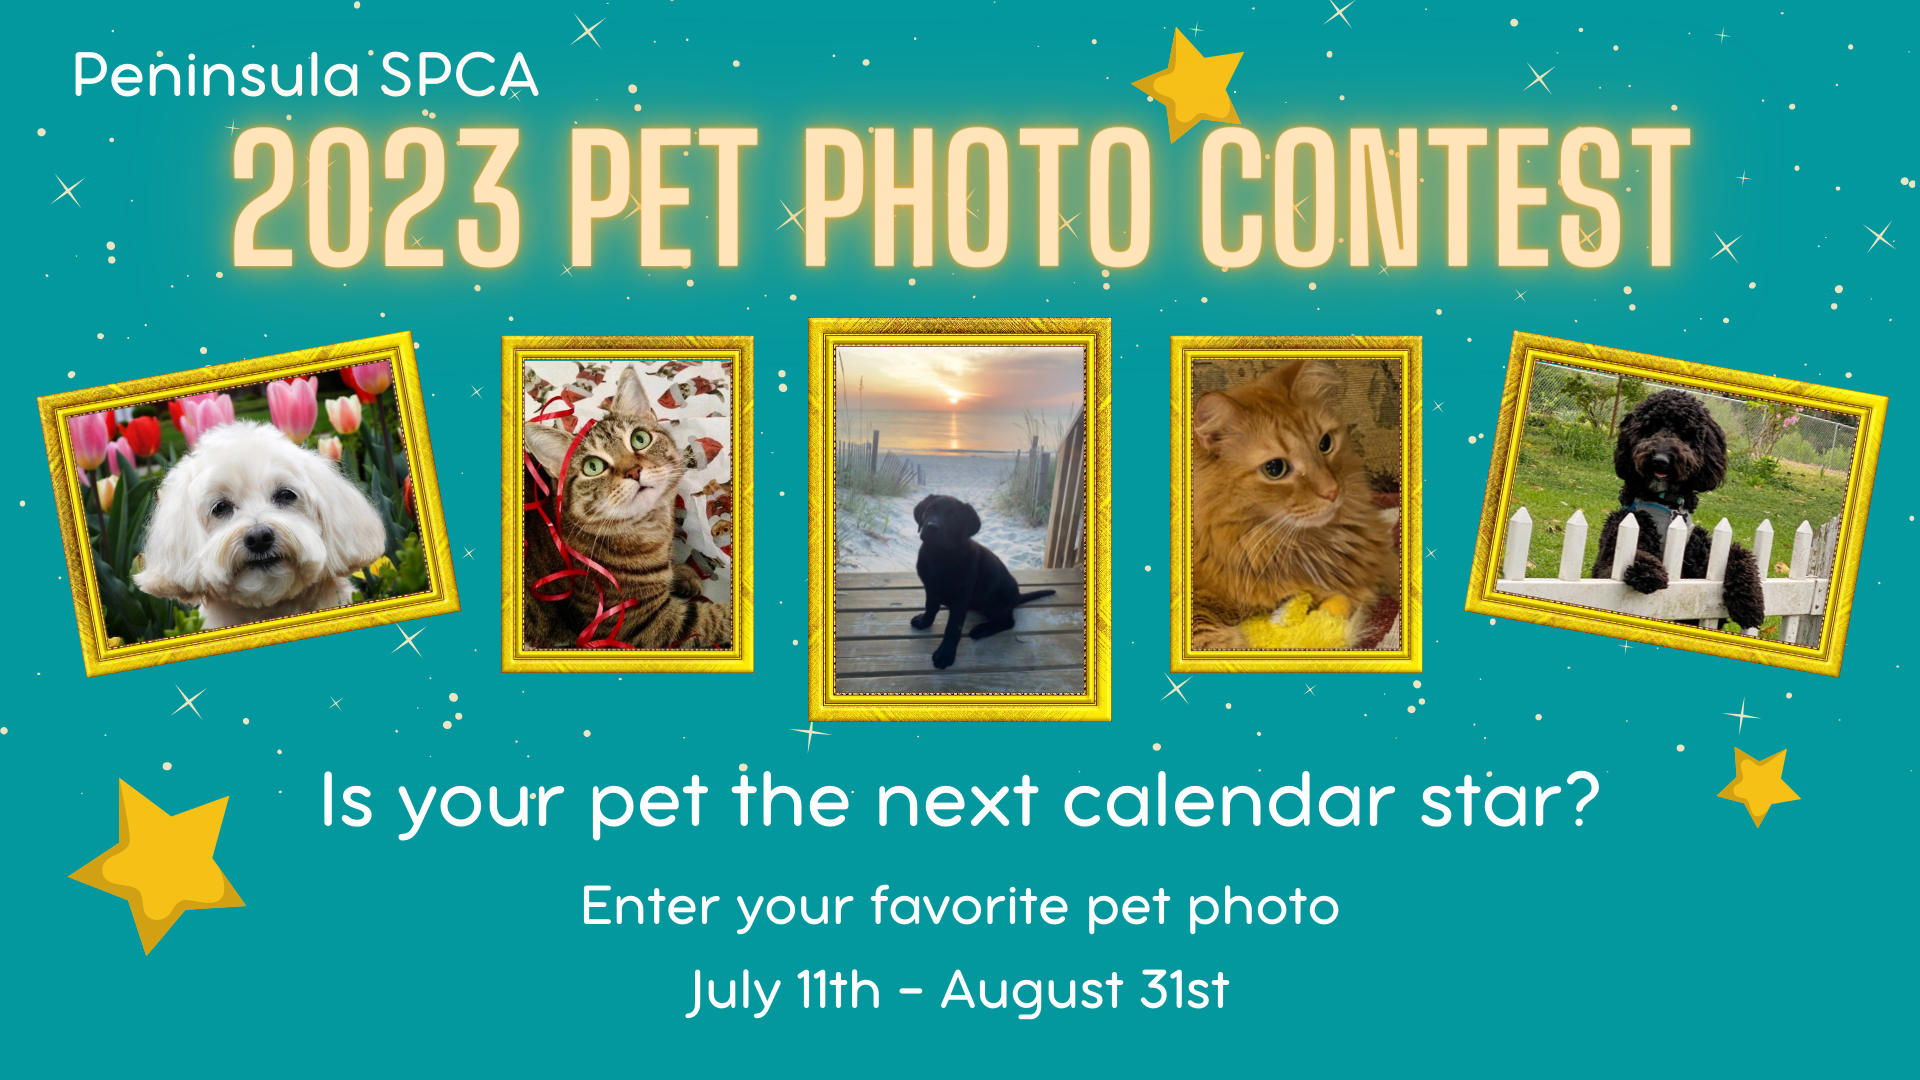 Peninsula SPCA | 2023 Peninsula SPCA Calendar Photo Contest